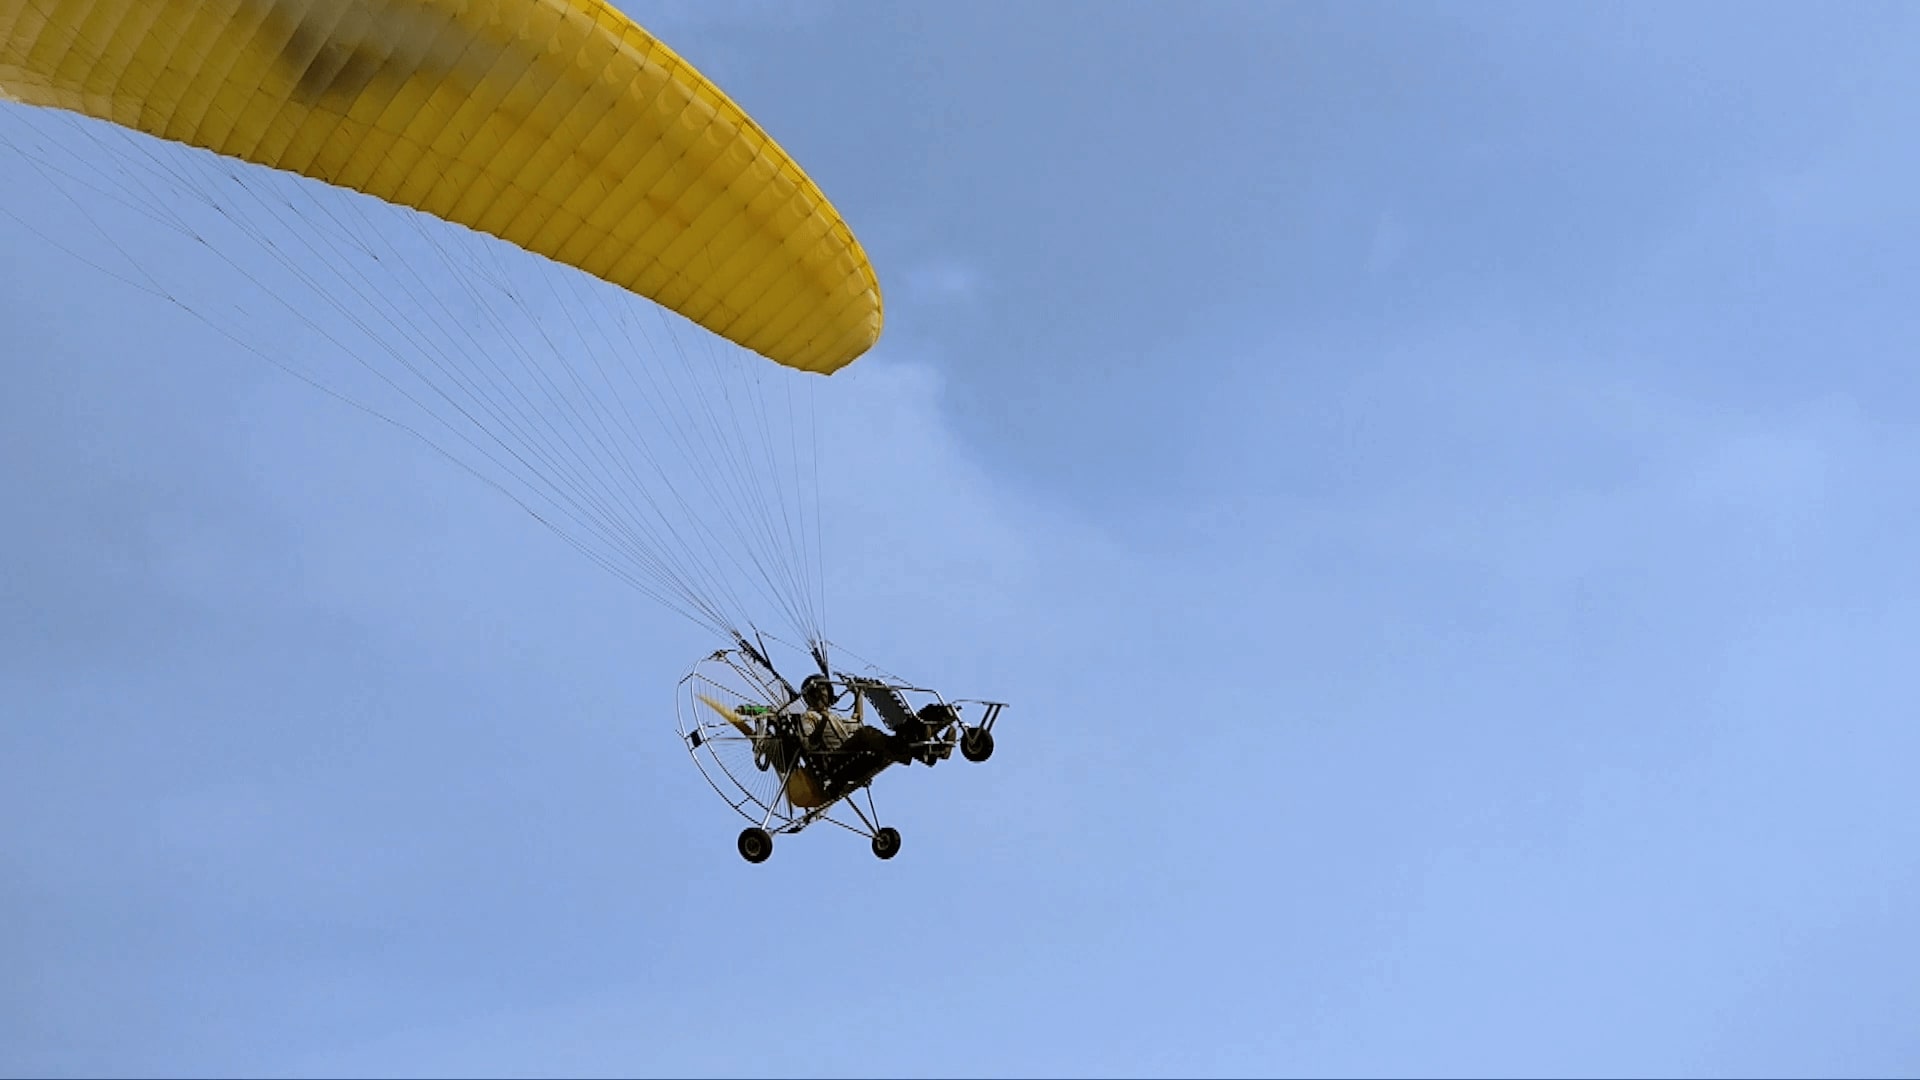 Paragliding Sacha Dench killed and Scientist Dan Burton Seriously injured after a crash In Scottish Highlands UK